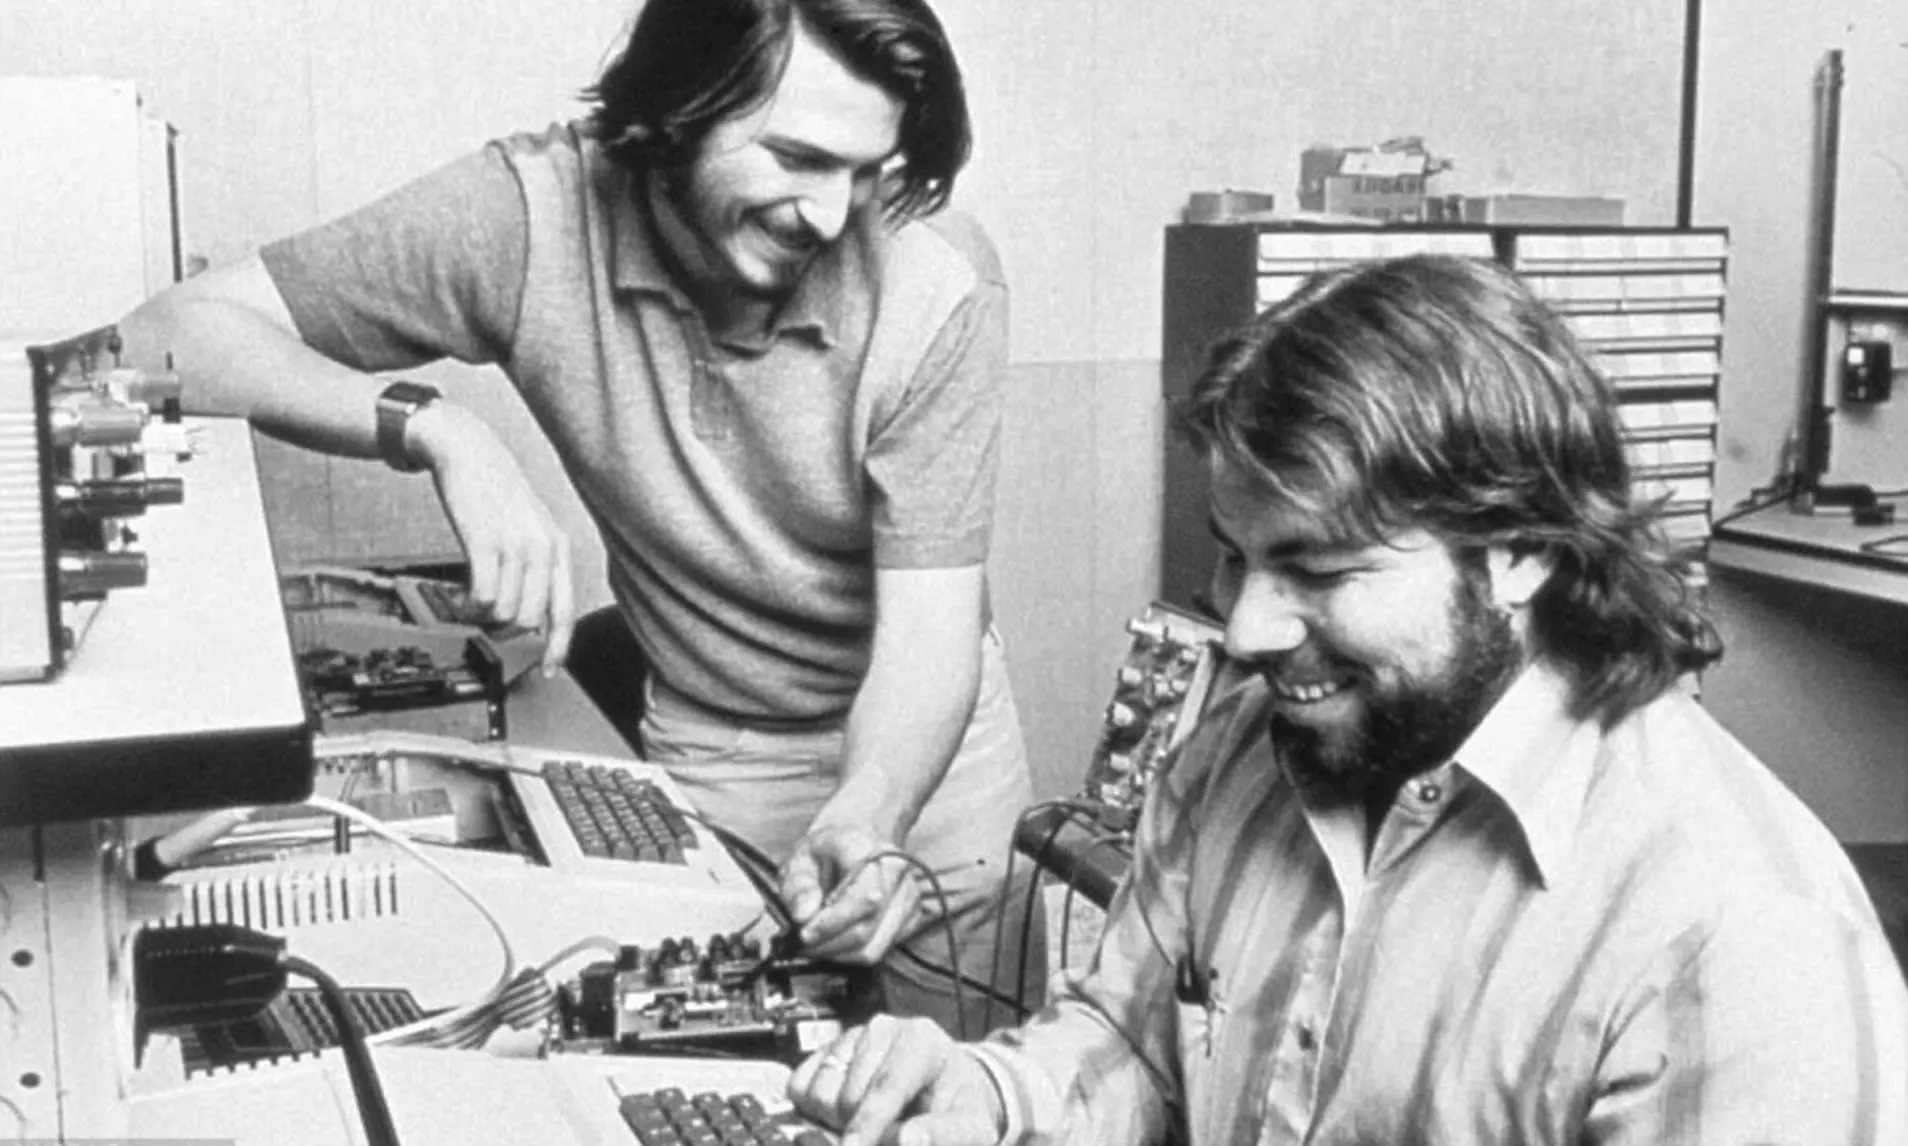 Steve Jobs and Steve Wozniak in the early days at Apple